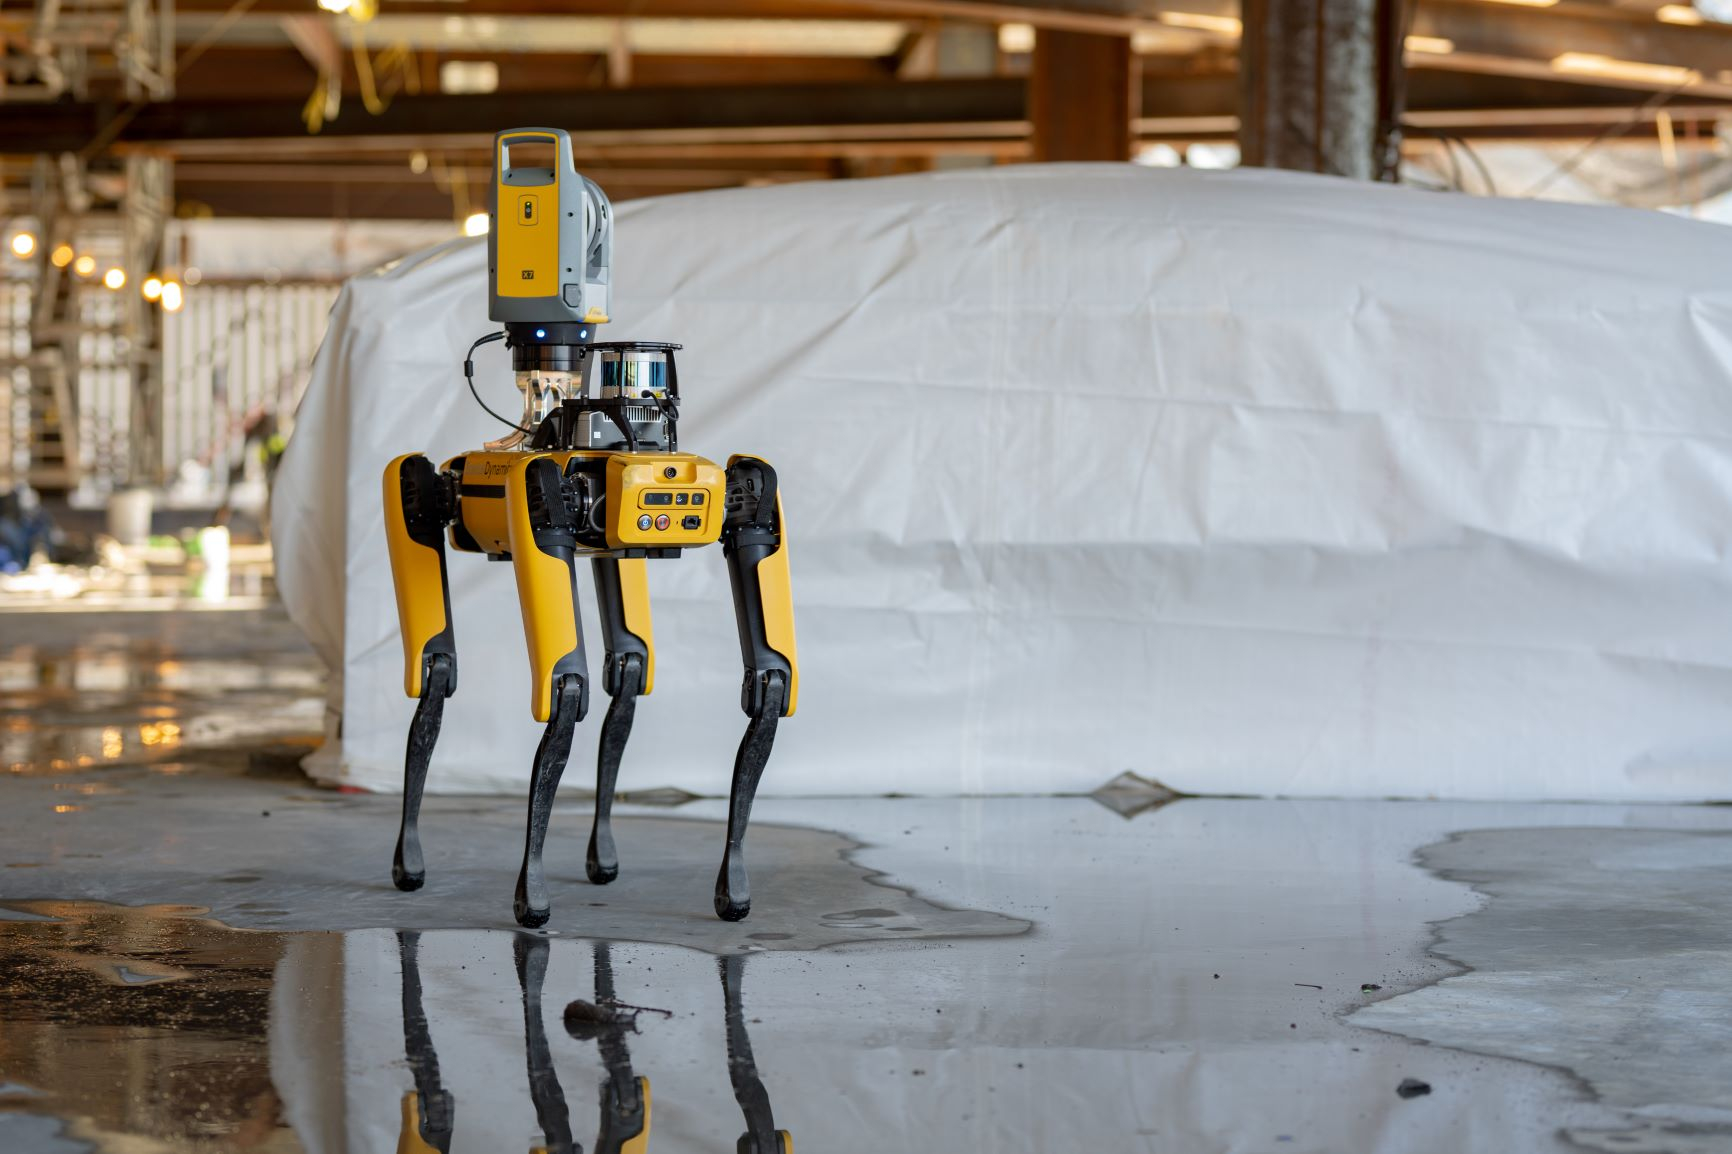 Boston Dynamics选用Velodyne的传感器为其灵活移动机器人提供感知和导航能力。这些机器人能够应对要求极为严苛的机器人技术挑战。图中Boston Dynamics的Spot移动机器人配备了Velodyne激光雷达传感器。 （照片： Boston Dynamics）